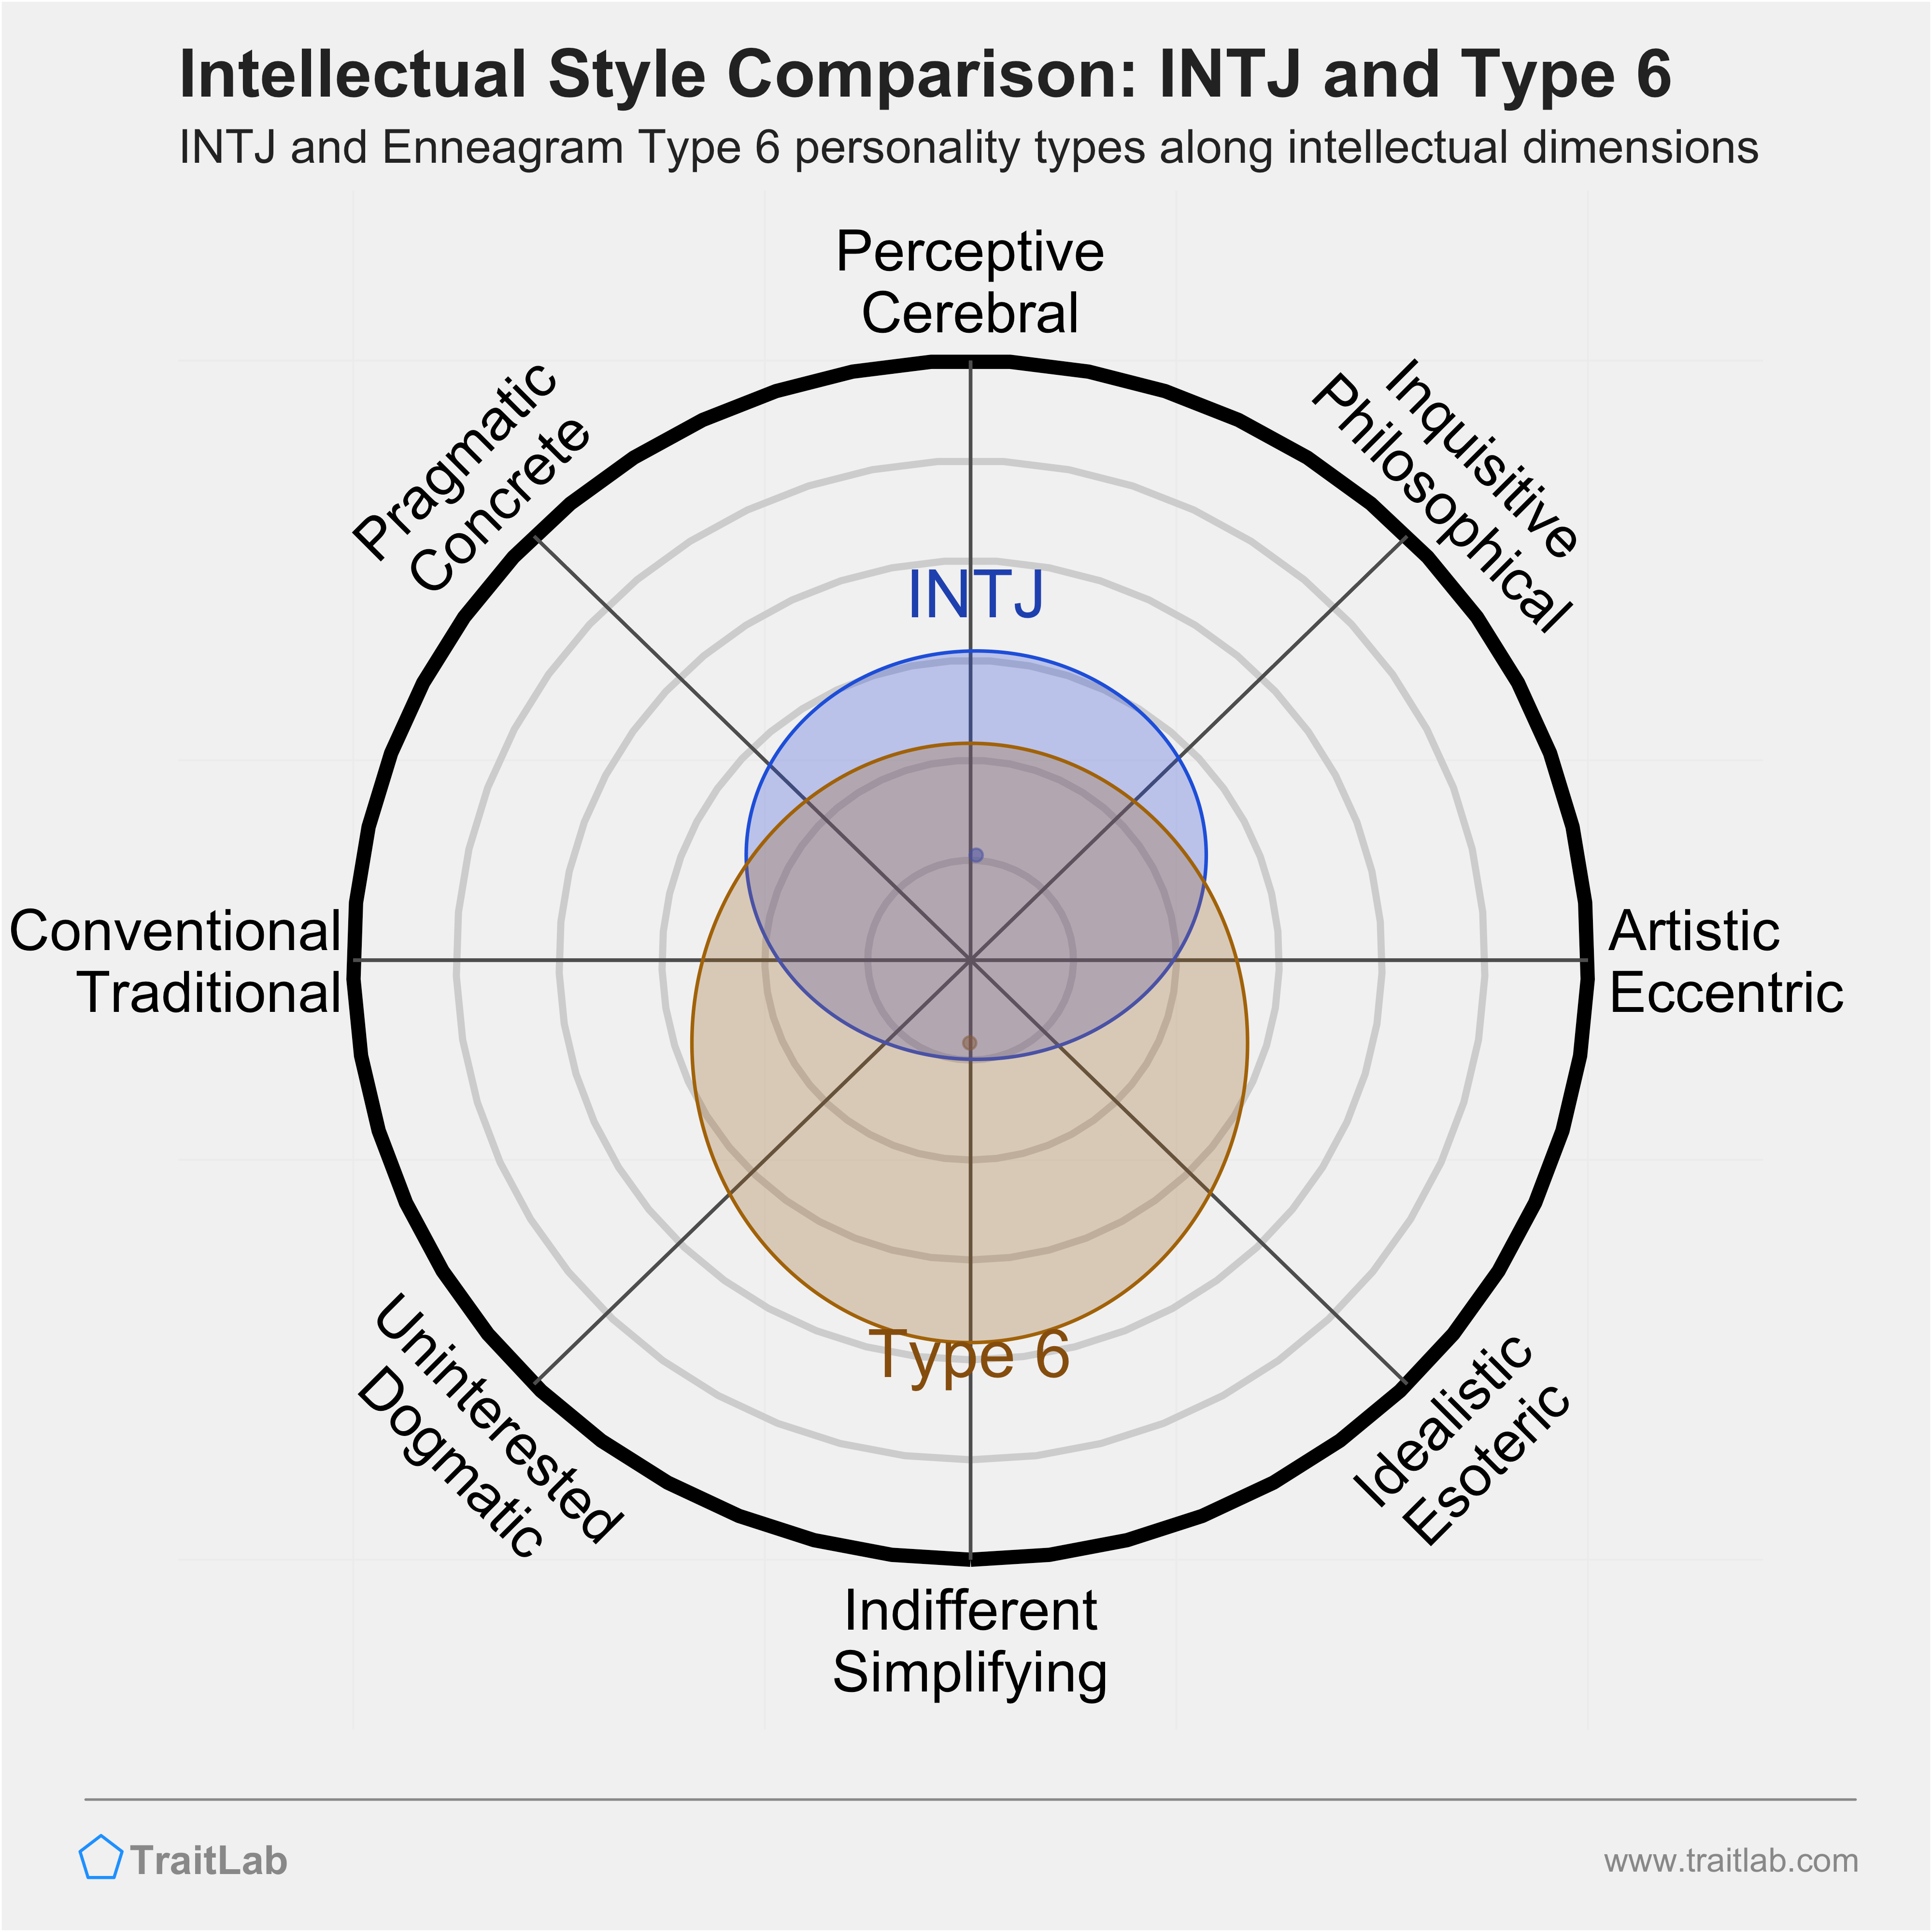 INTJ and Type 6 comparison across intellectual dimensions